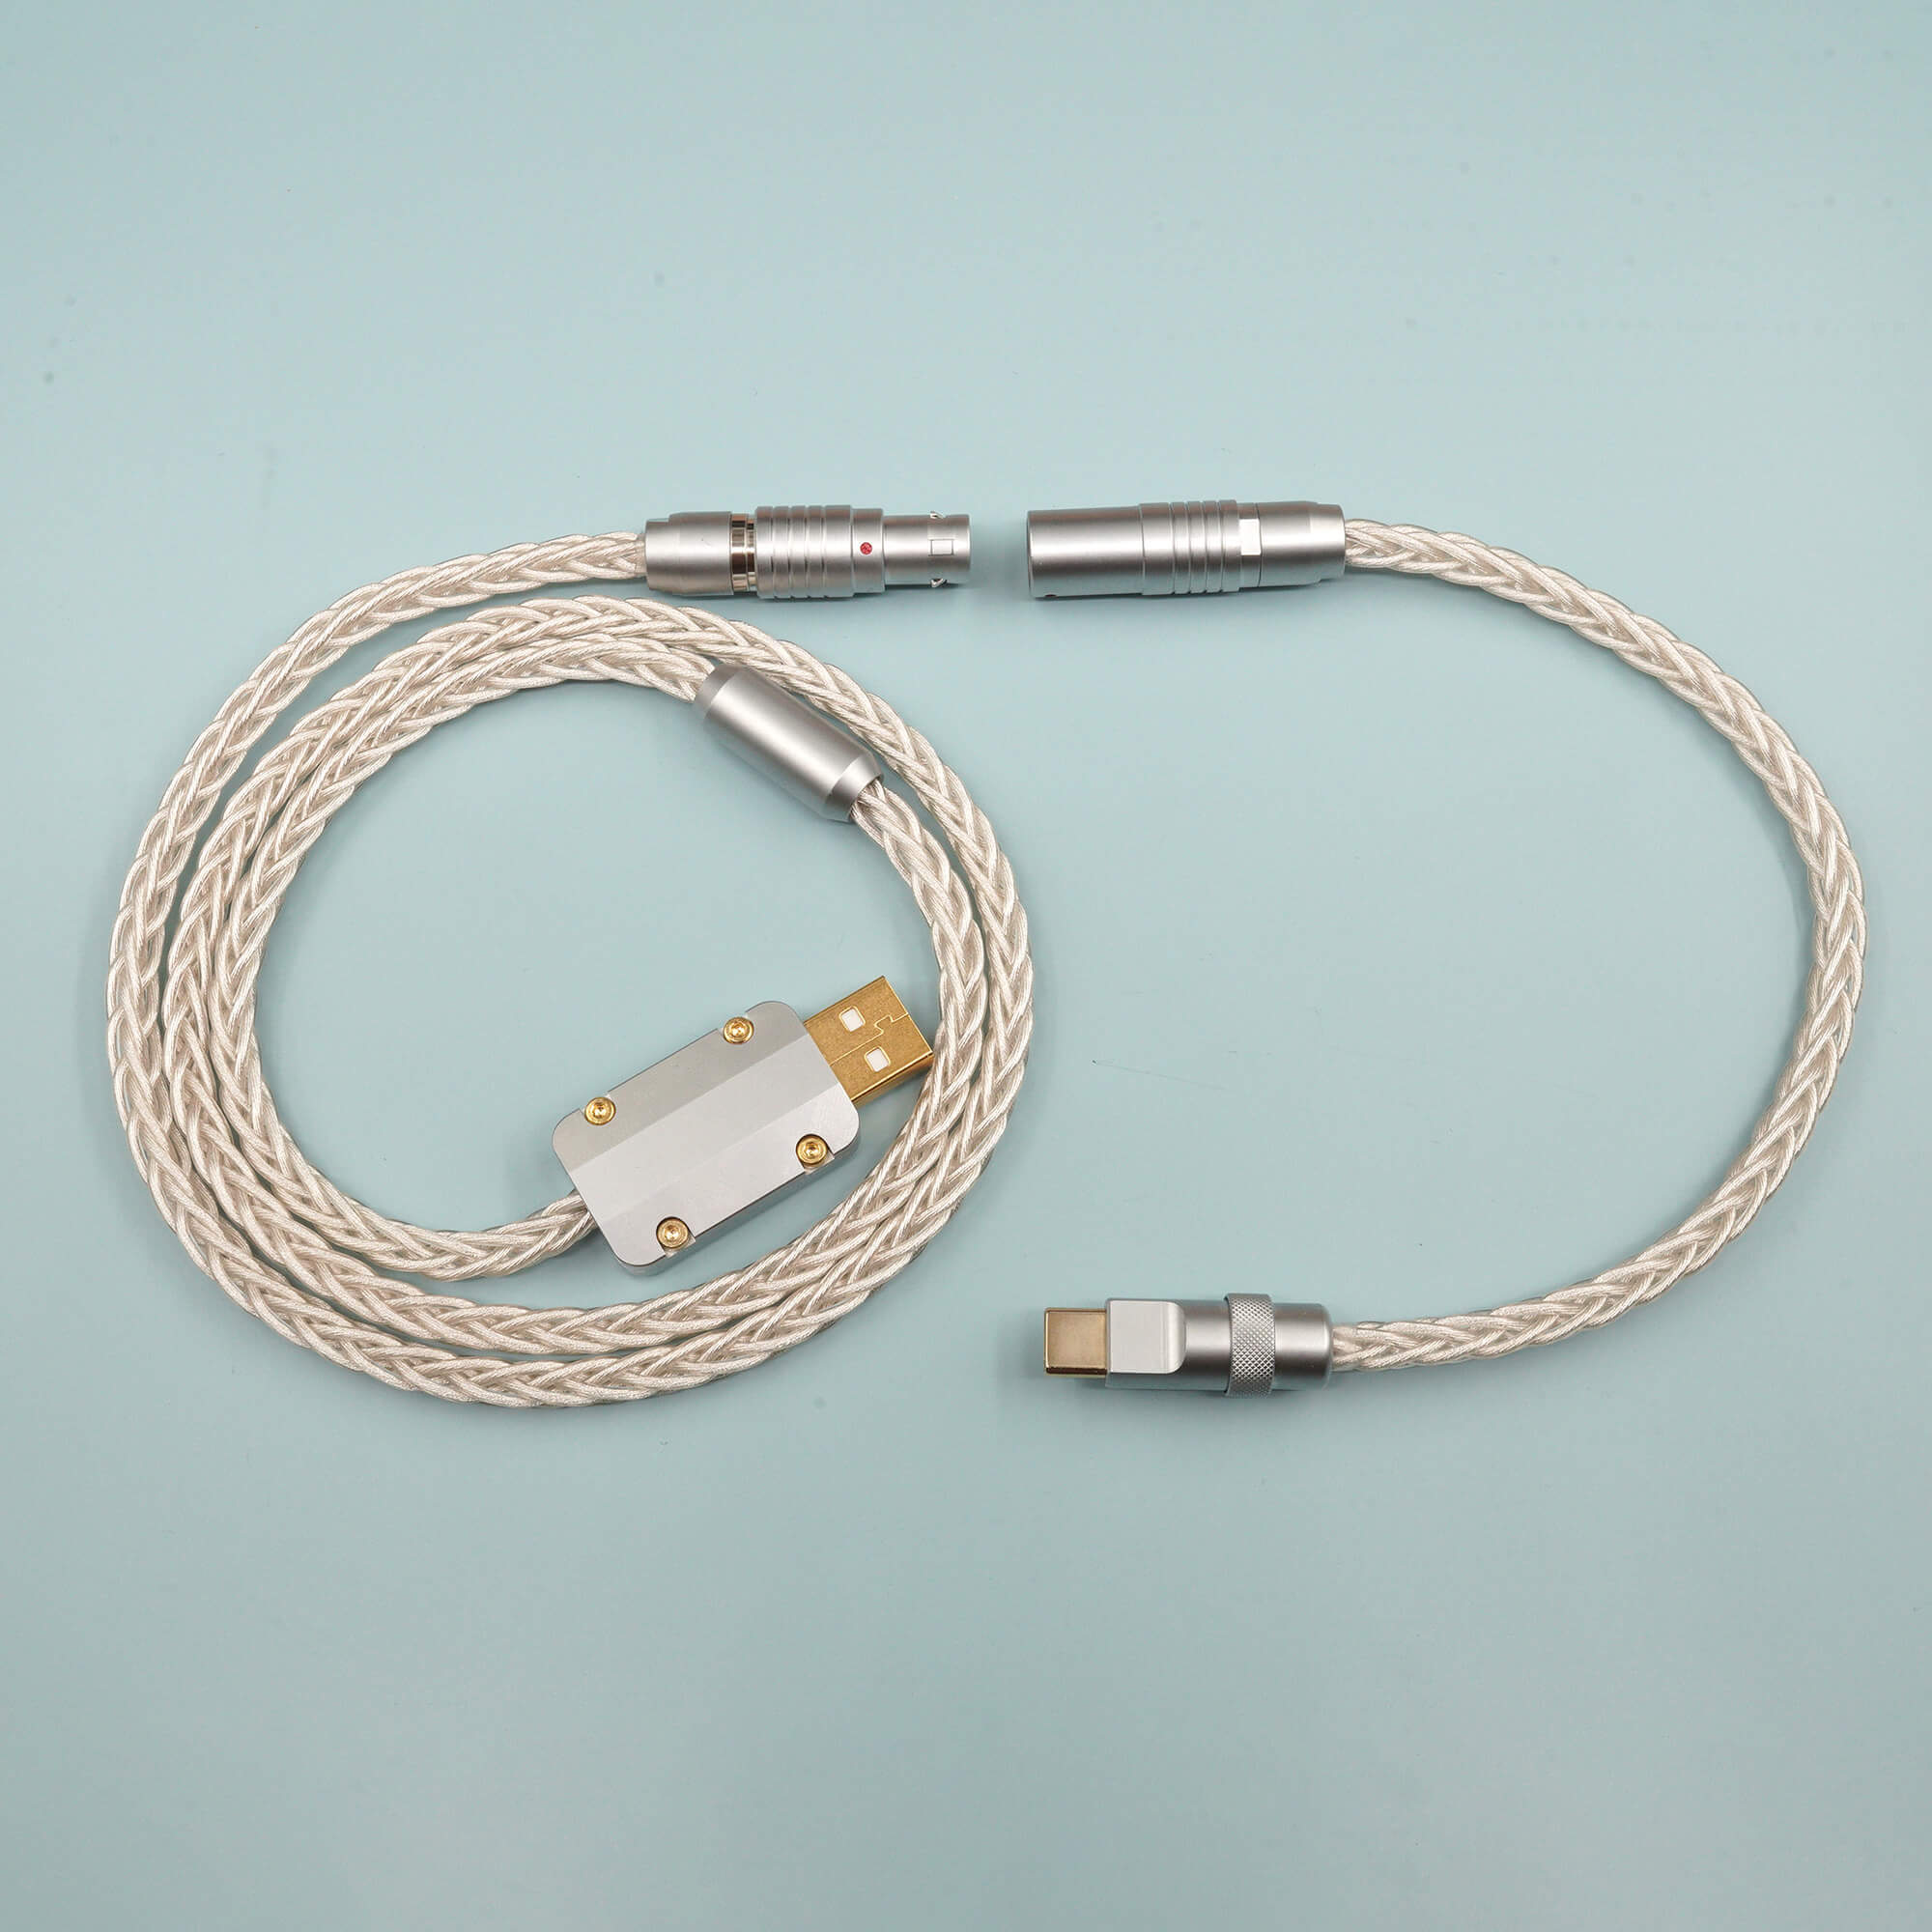 MelGeek Handgefertigtes USB-Kabel mit silberummanteltem Monokristall-Kupferdraht